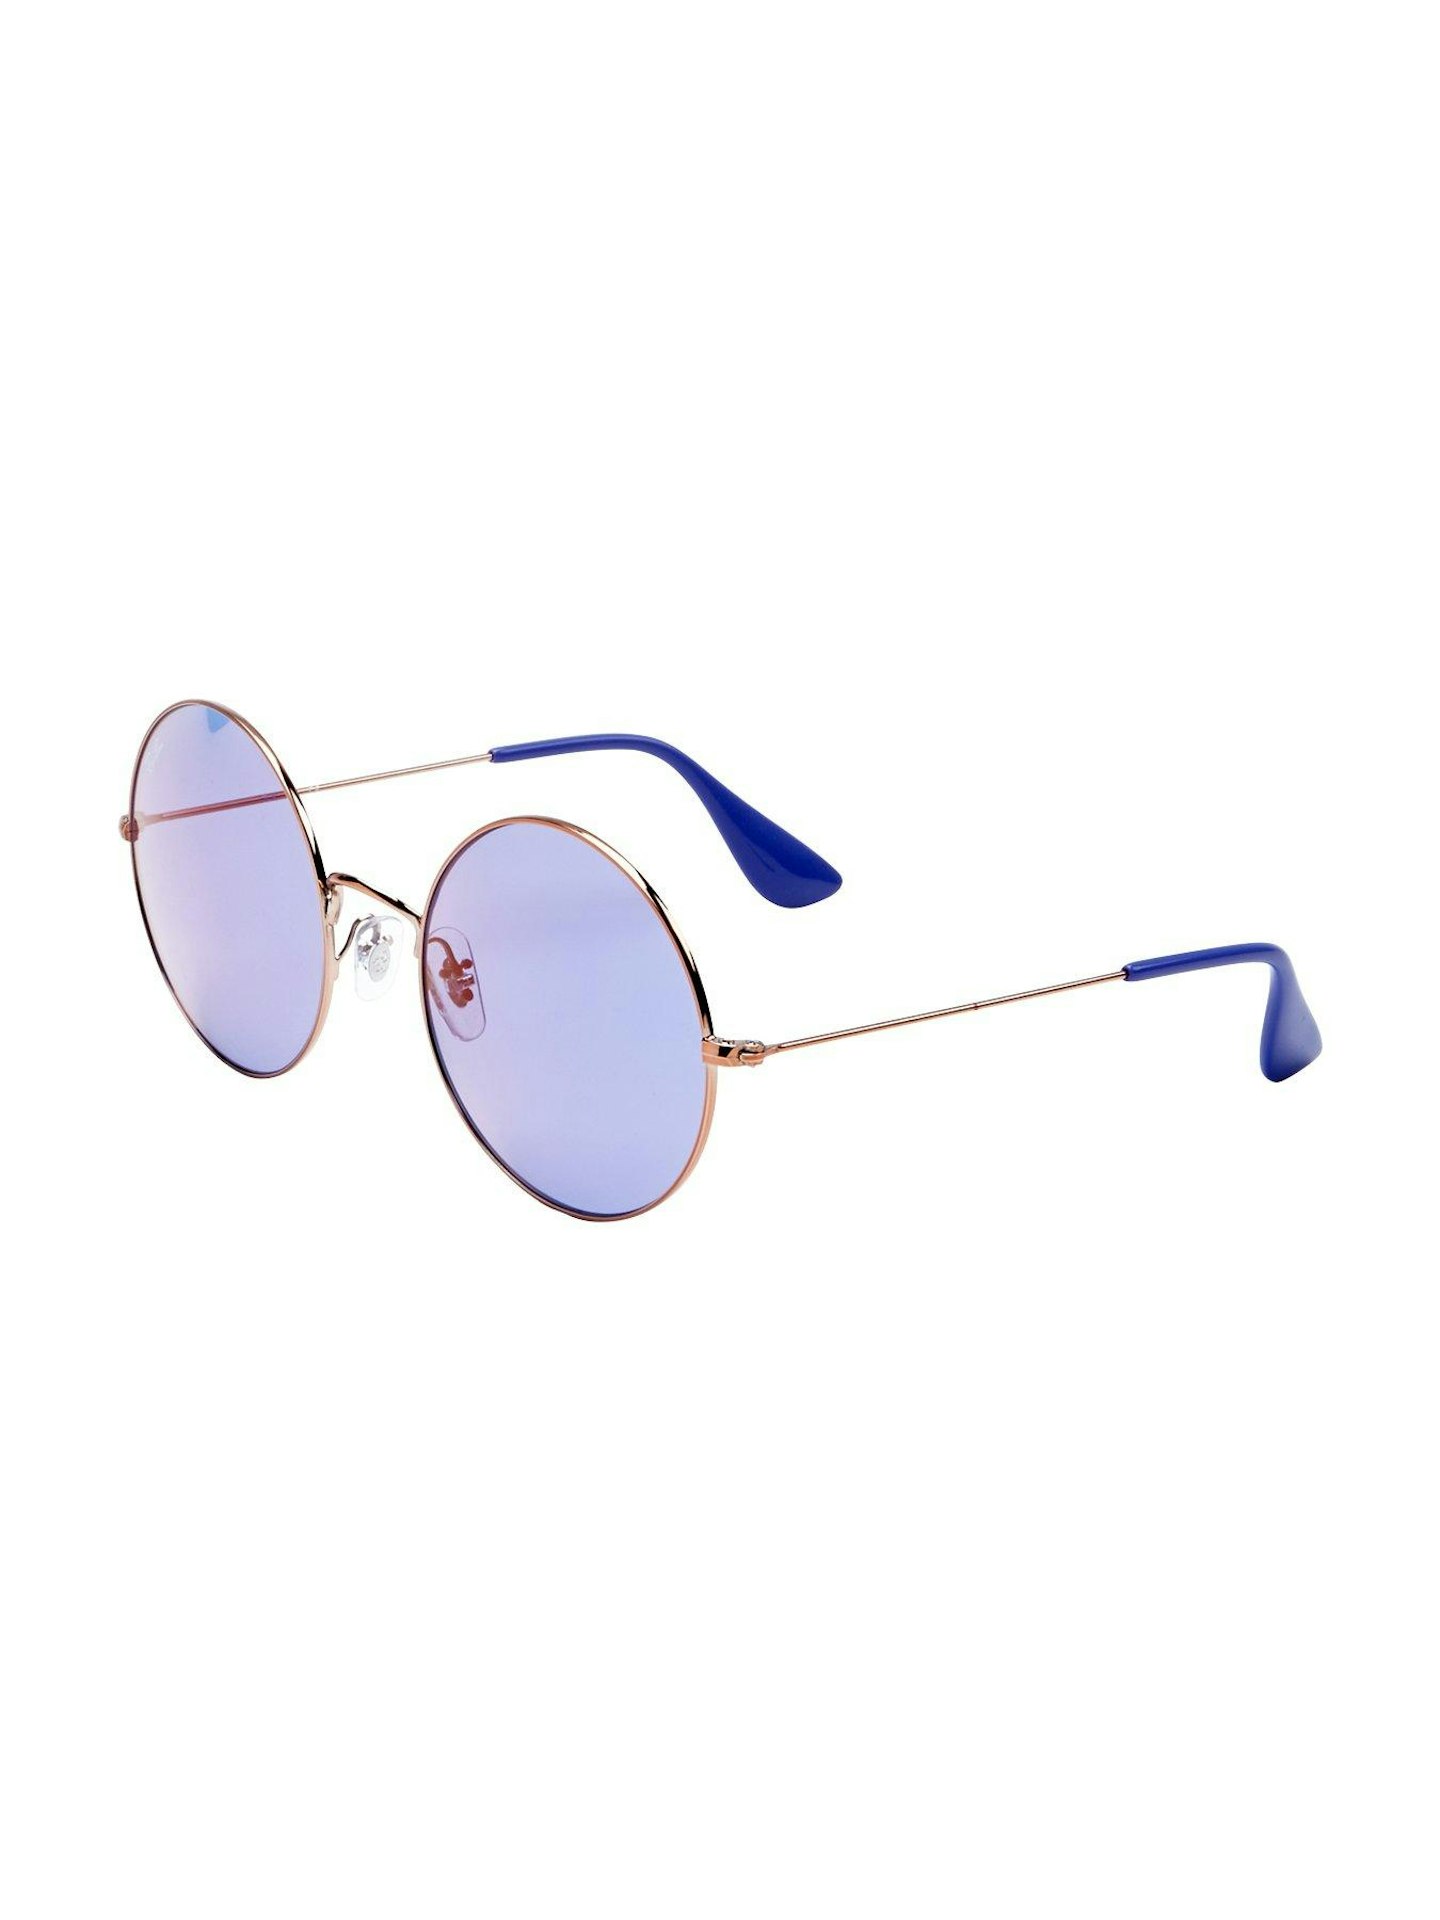 rayban-round-blue-sunglasses